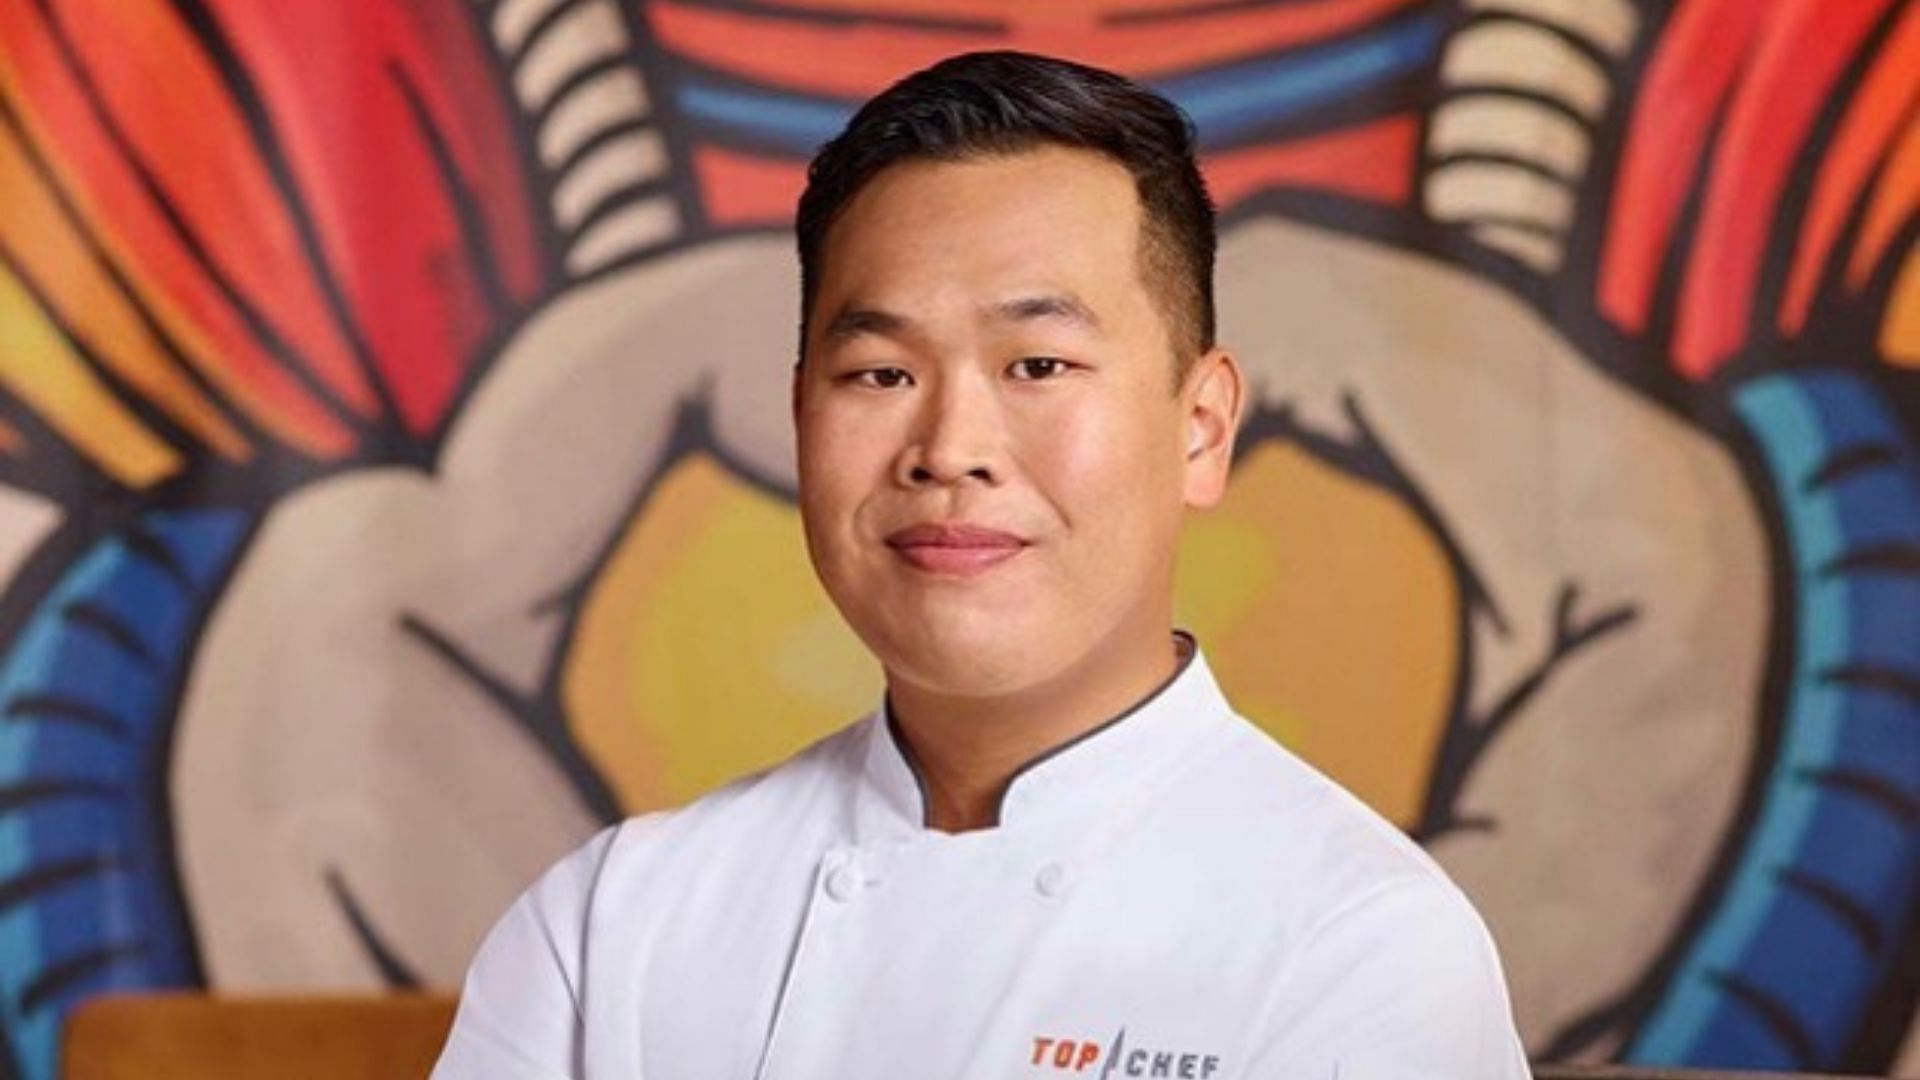 Top Chef season 19 contestant Buddha Lo (Image via buddha__lo/Instagram)